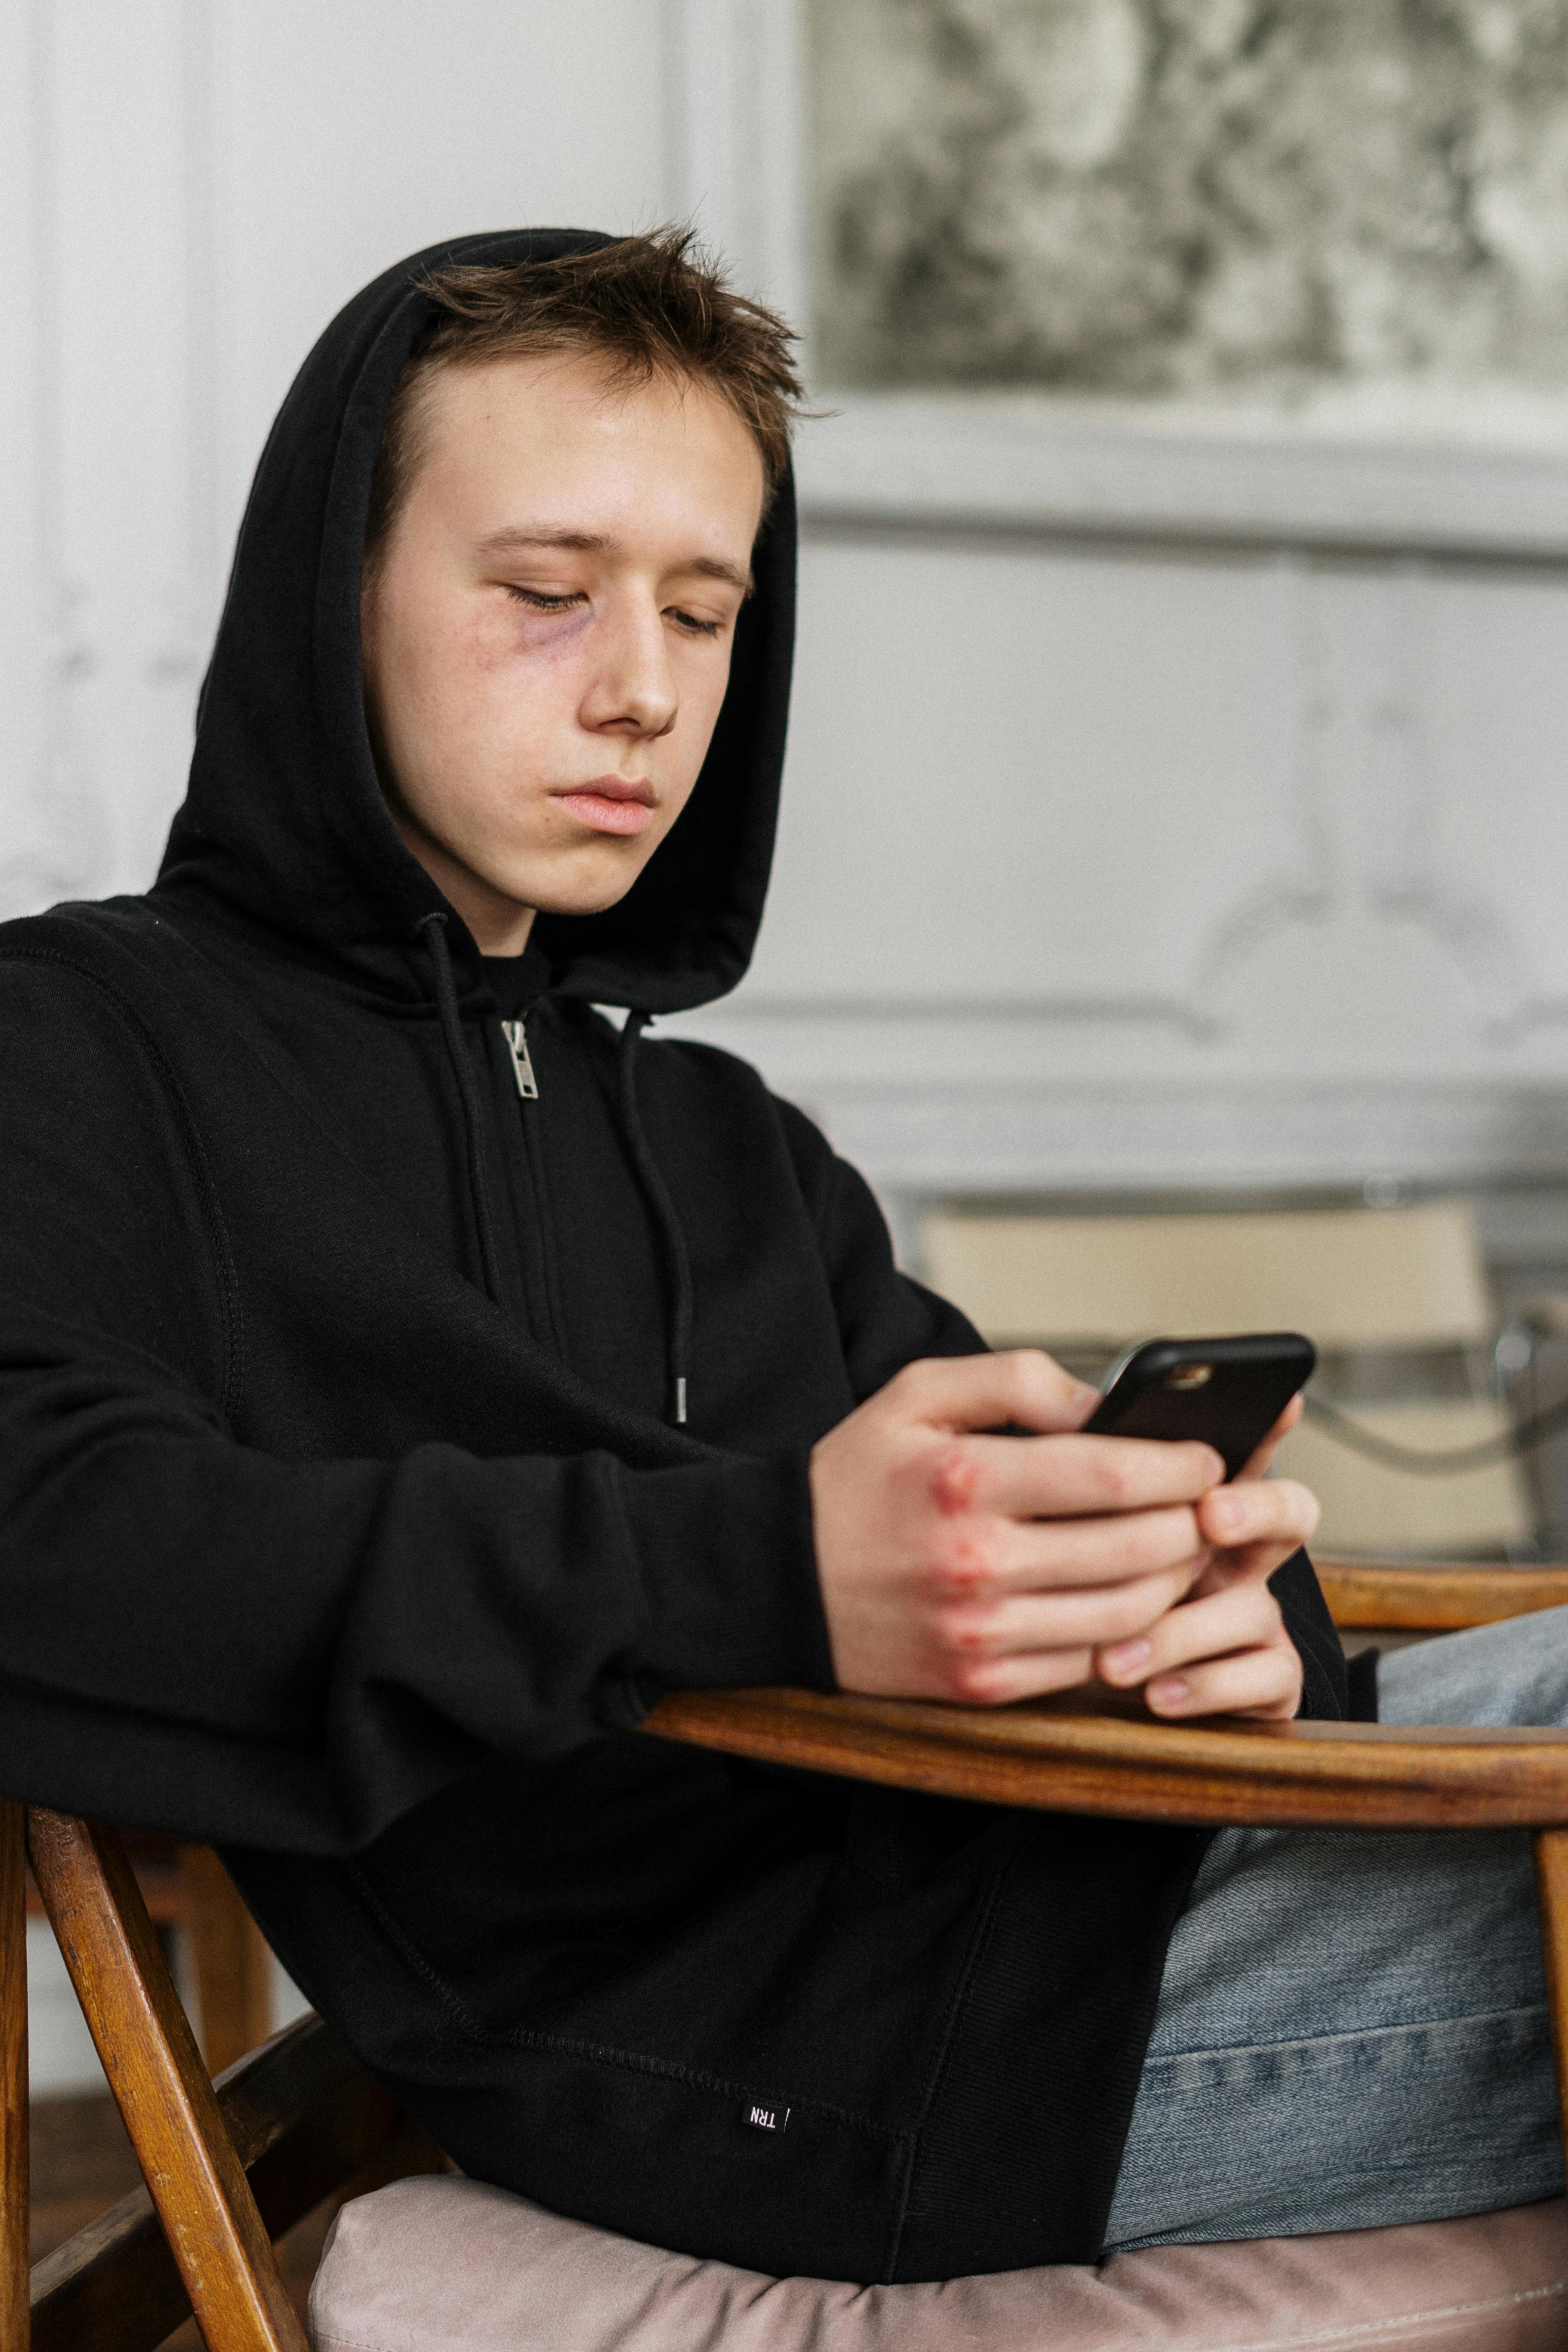 A teenage boy holding a smartphone | Source: Pexels